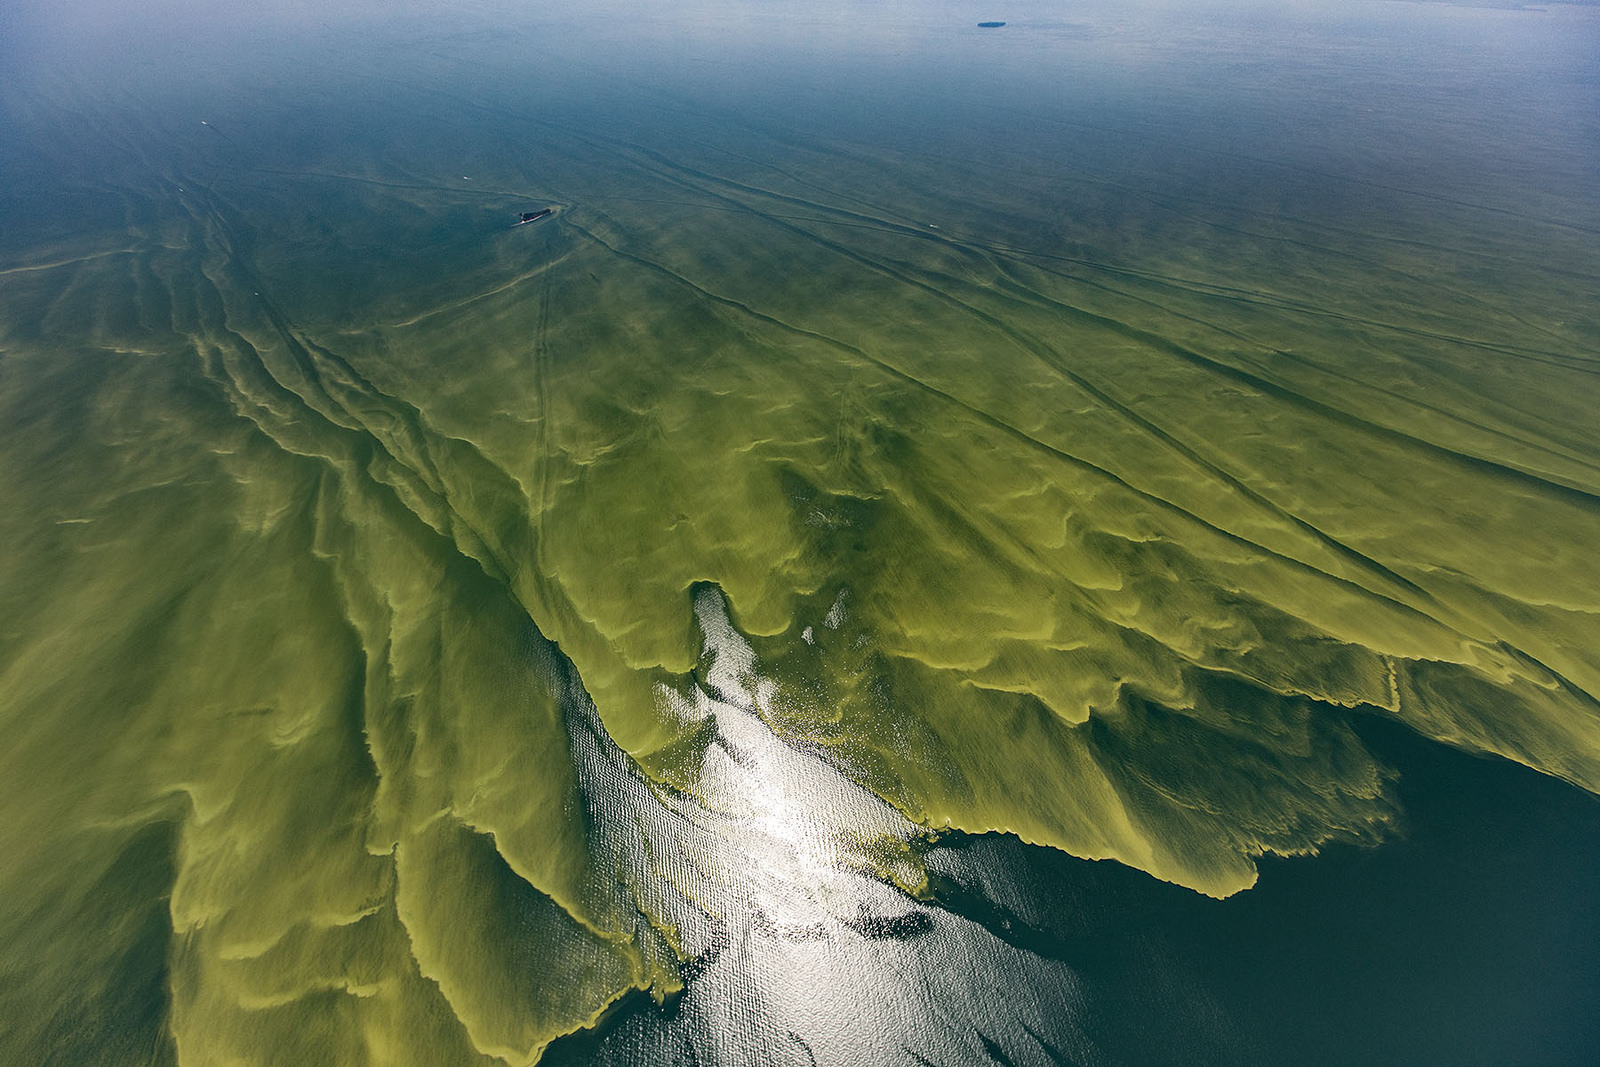 Cyanobacteria algae